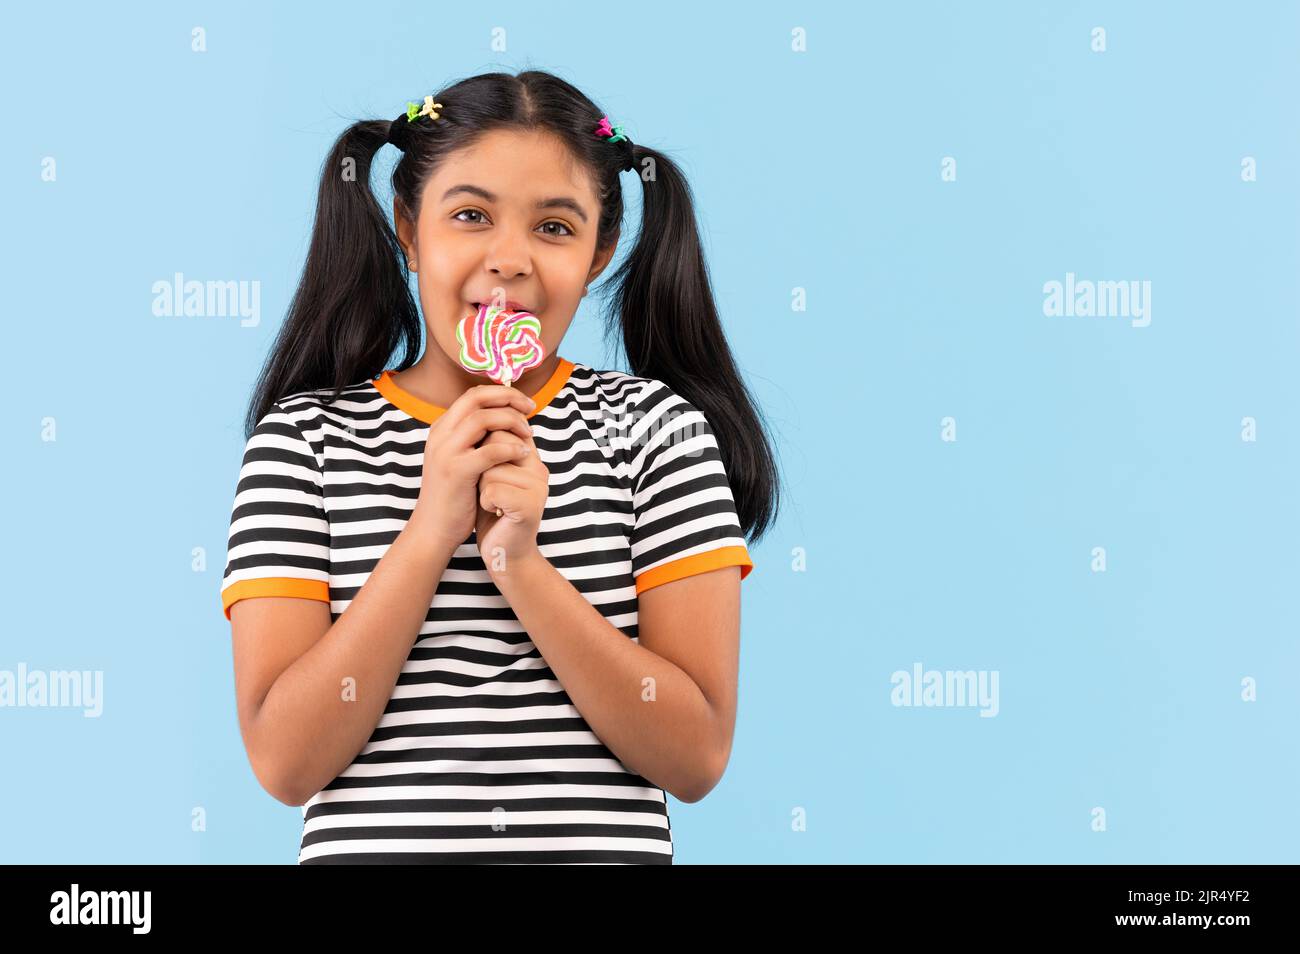 Portrait of little girl licking lollipop against plain background Stock Photo